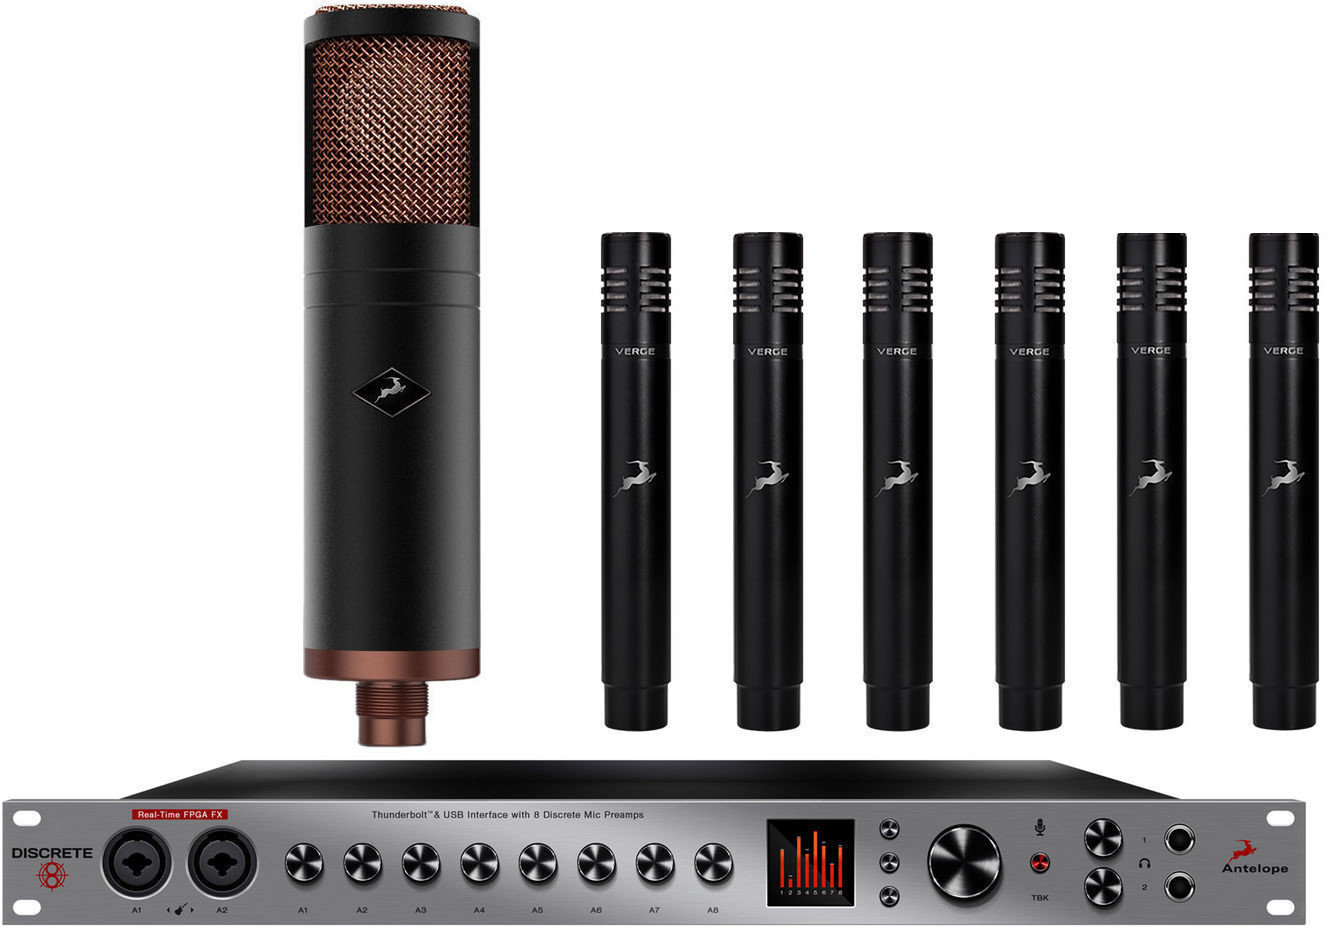 Microphone Preamp Antelope Audio Discrete 8 + Edge + Verge 6 pcs